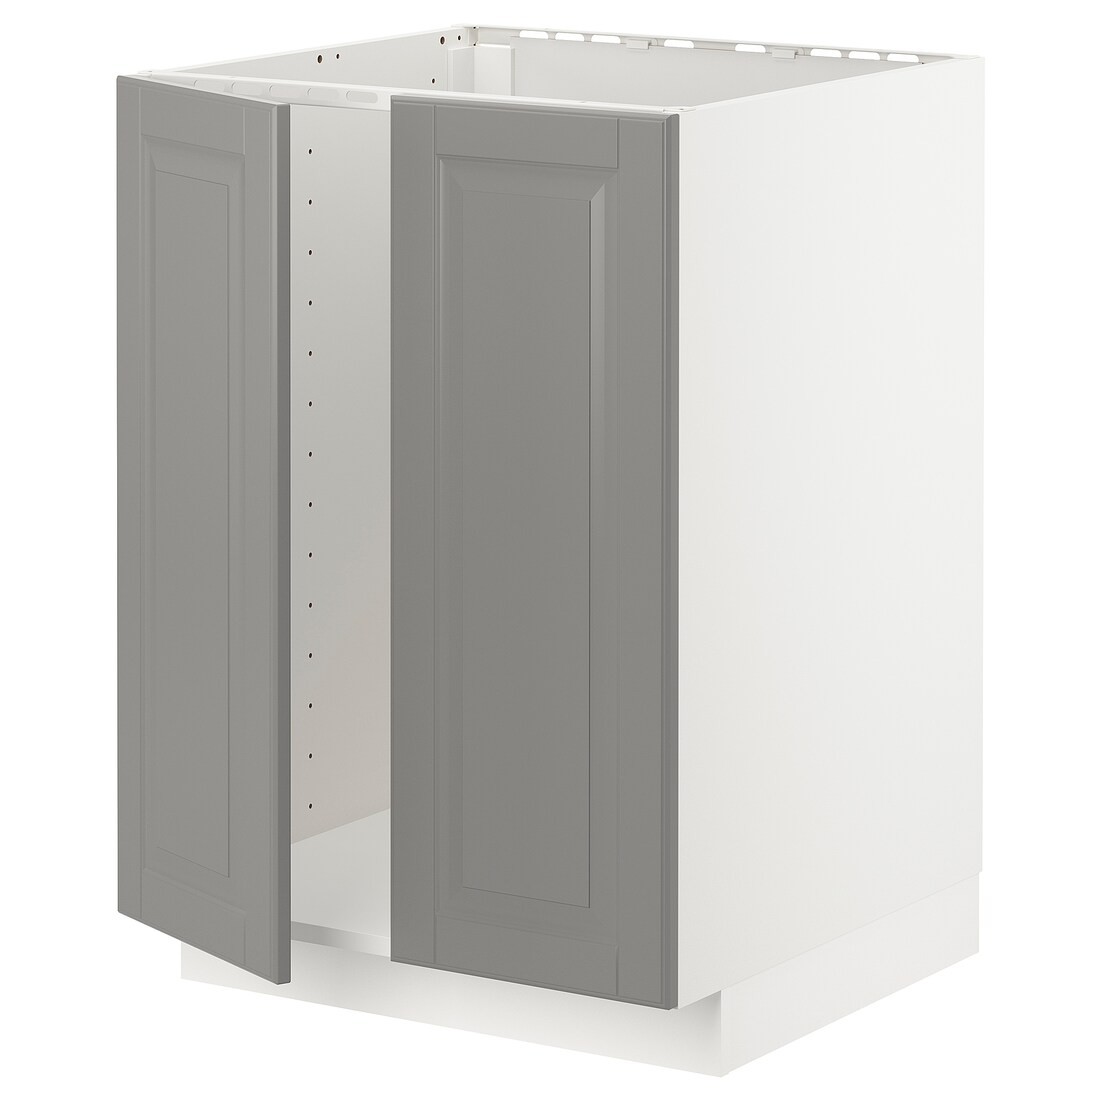 IKEA METOD МЕТОД Напольный шкаф для мойки, белый / Bodbyn серый, 60x60 см 19469342 194.693.42